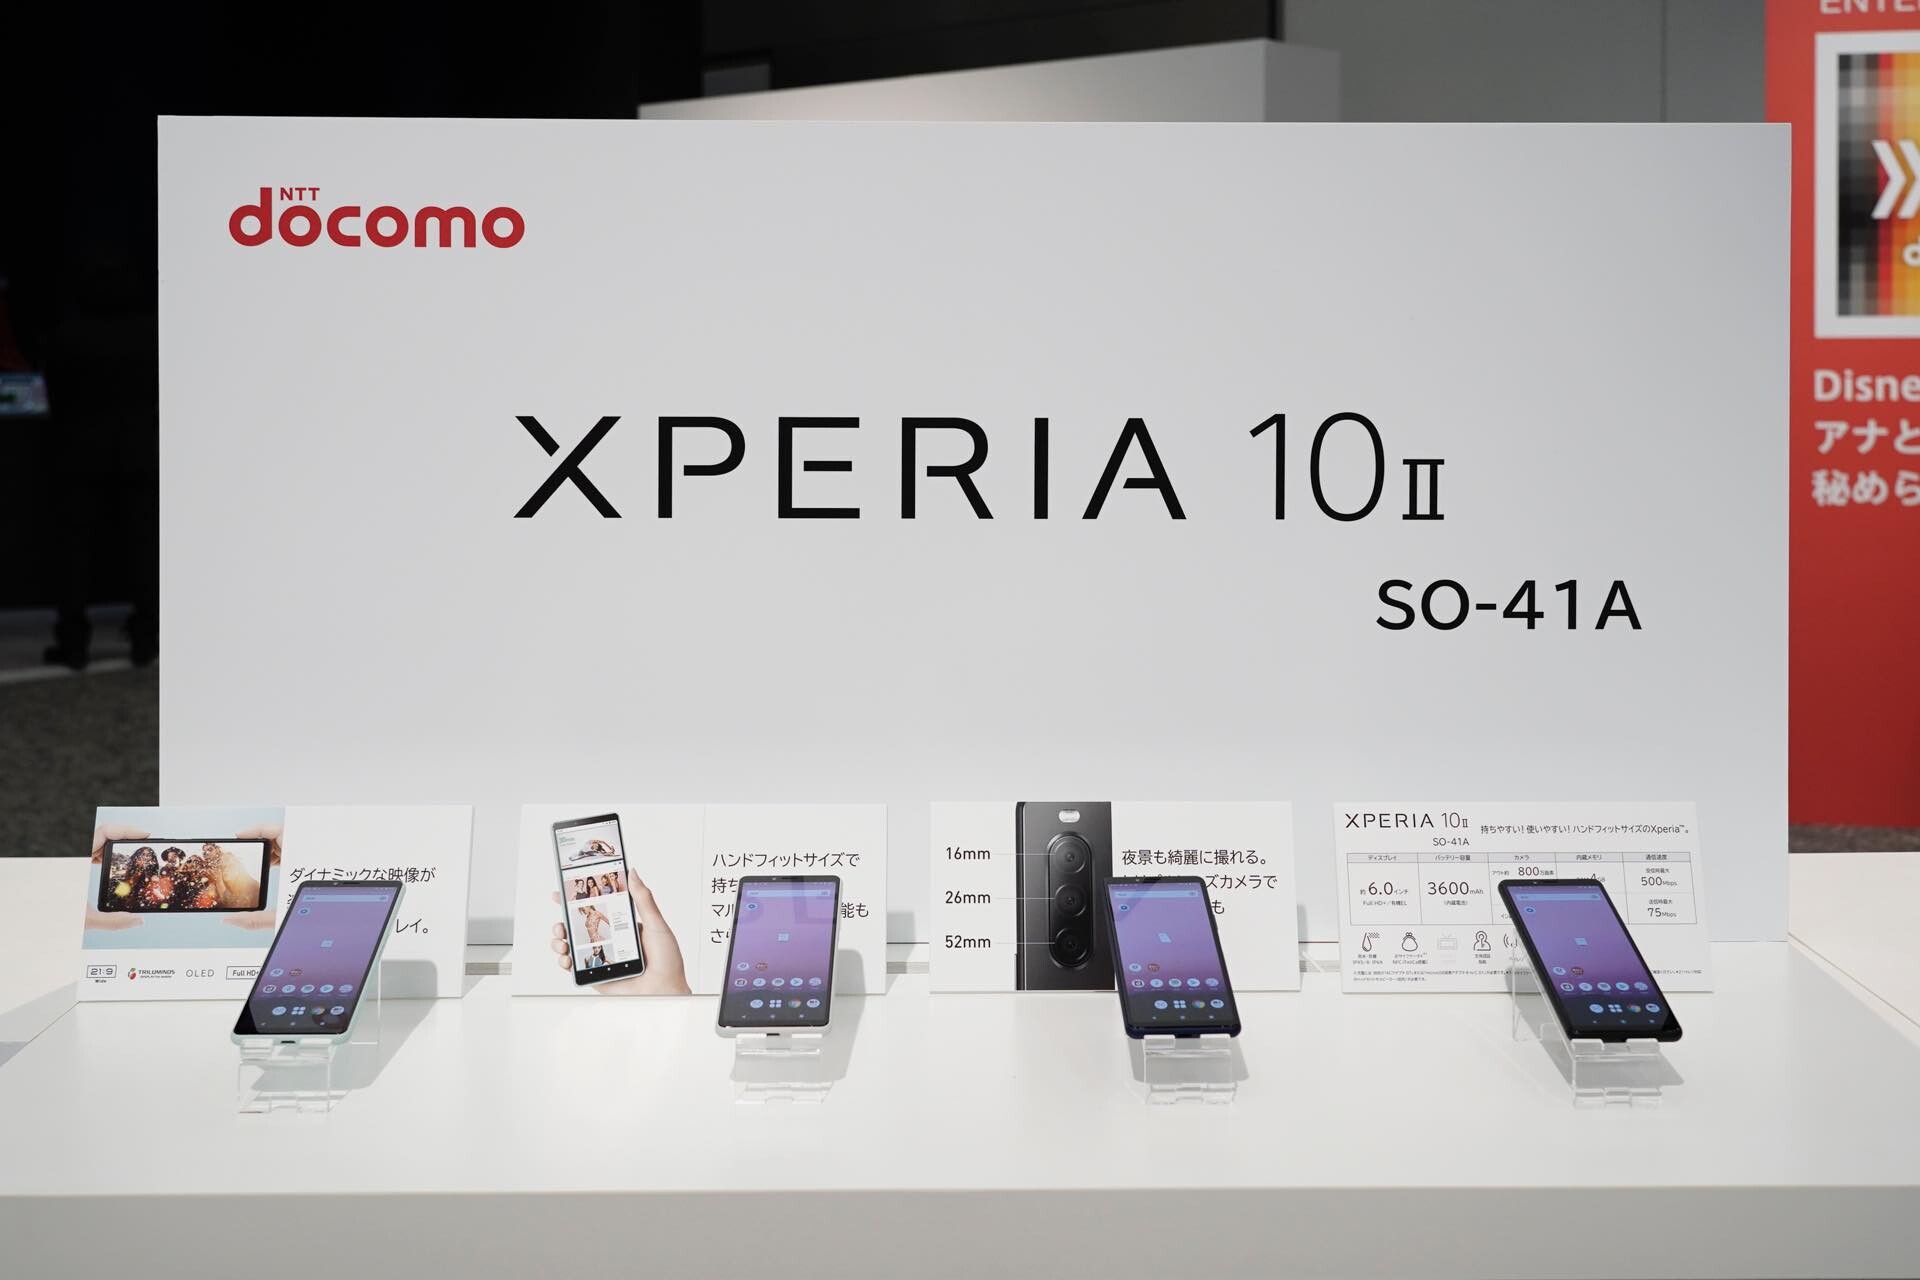 Nttドコモ スタンダードスマホ Xperia 10 Ii So 41a を発表 5月下旬発売で価格は4万75円 Felicaに対応 ライブドアニュース